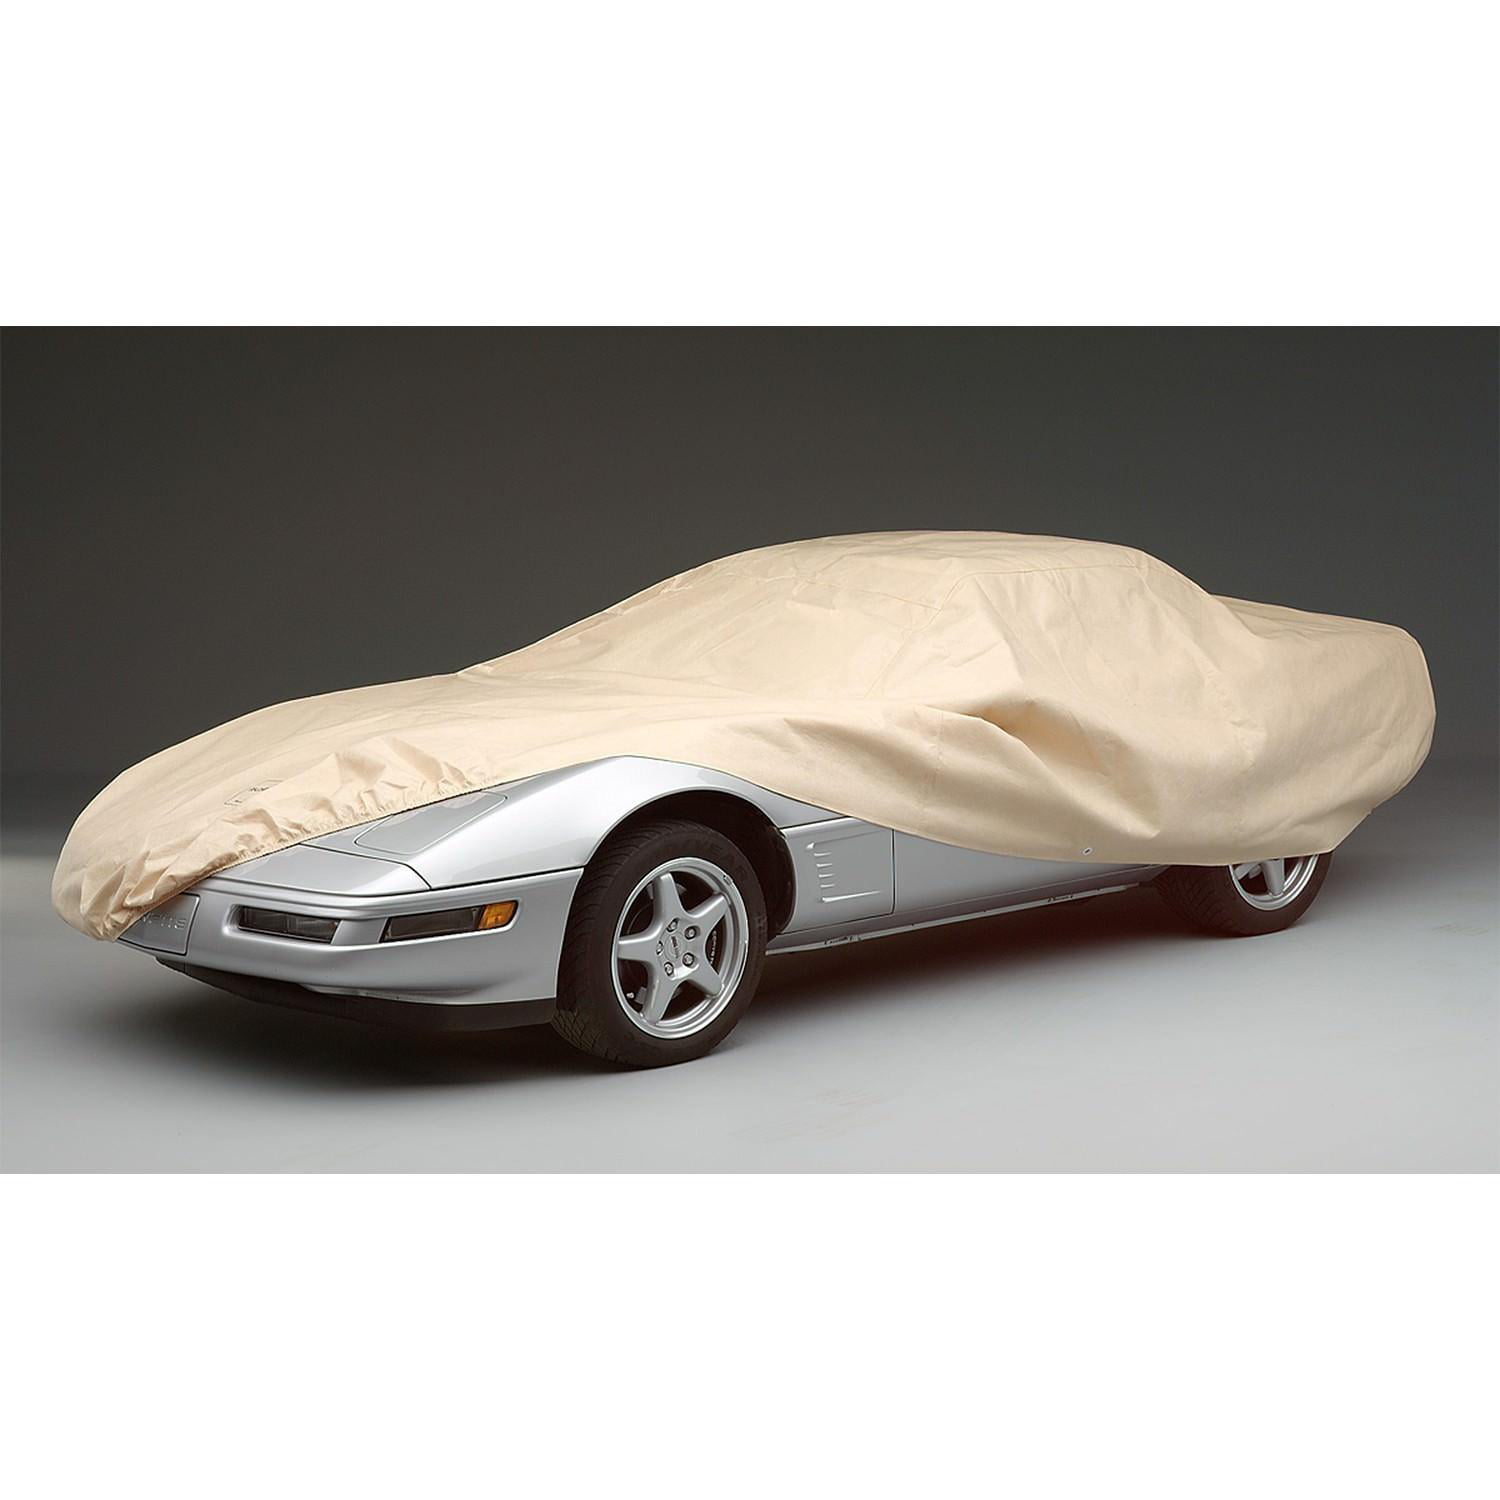 Indoor/Outdoor Covercraft Custom Car Covers Gray or Tan Block-it Evolution